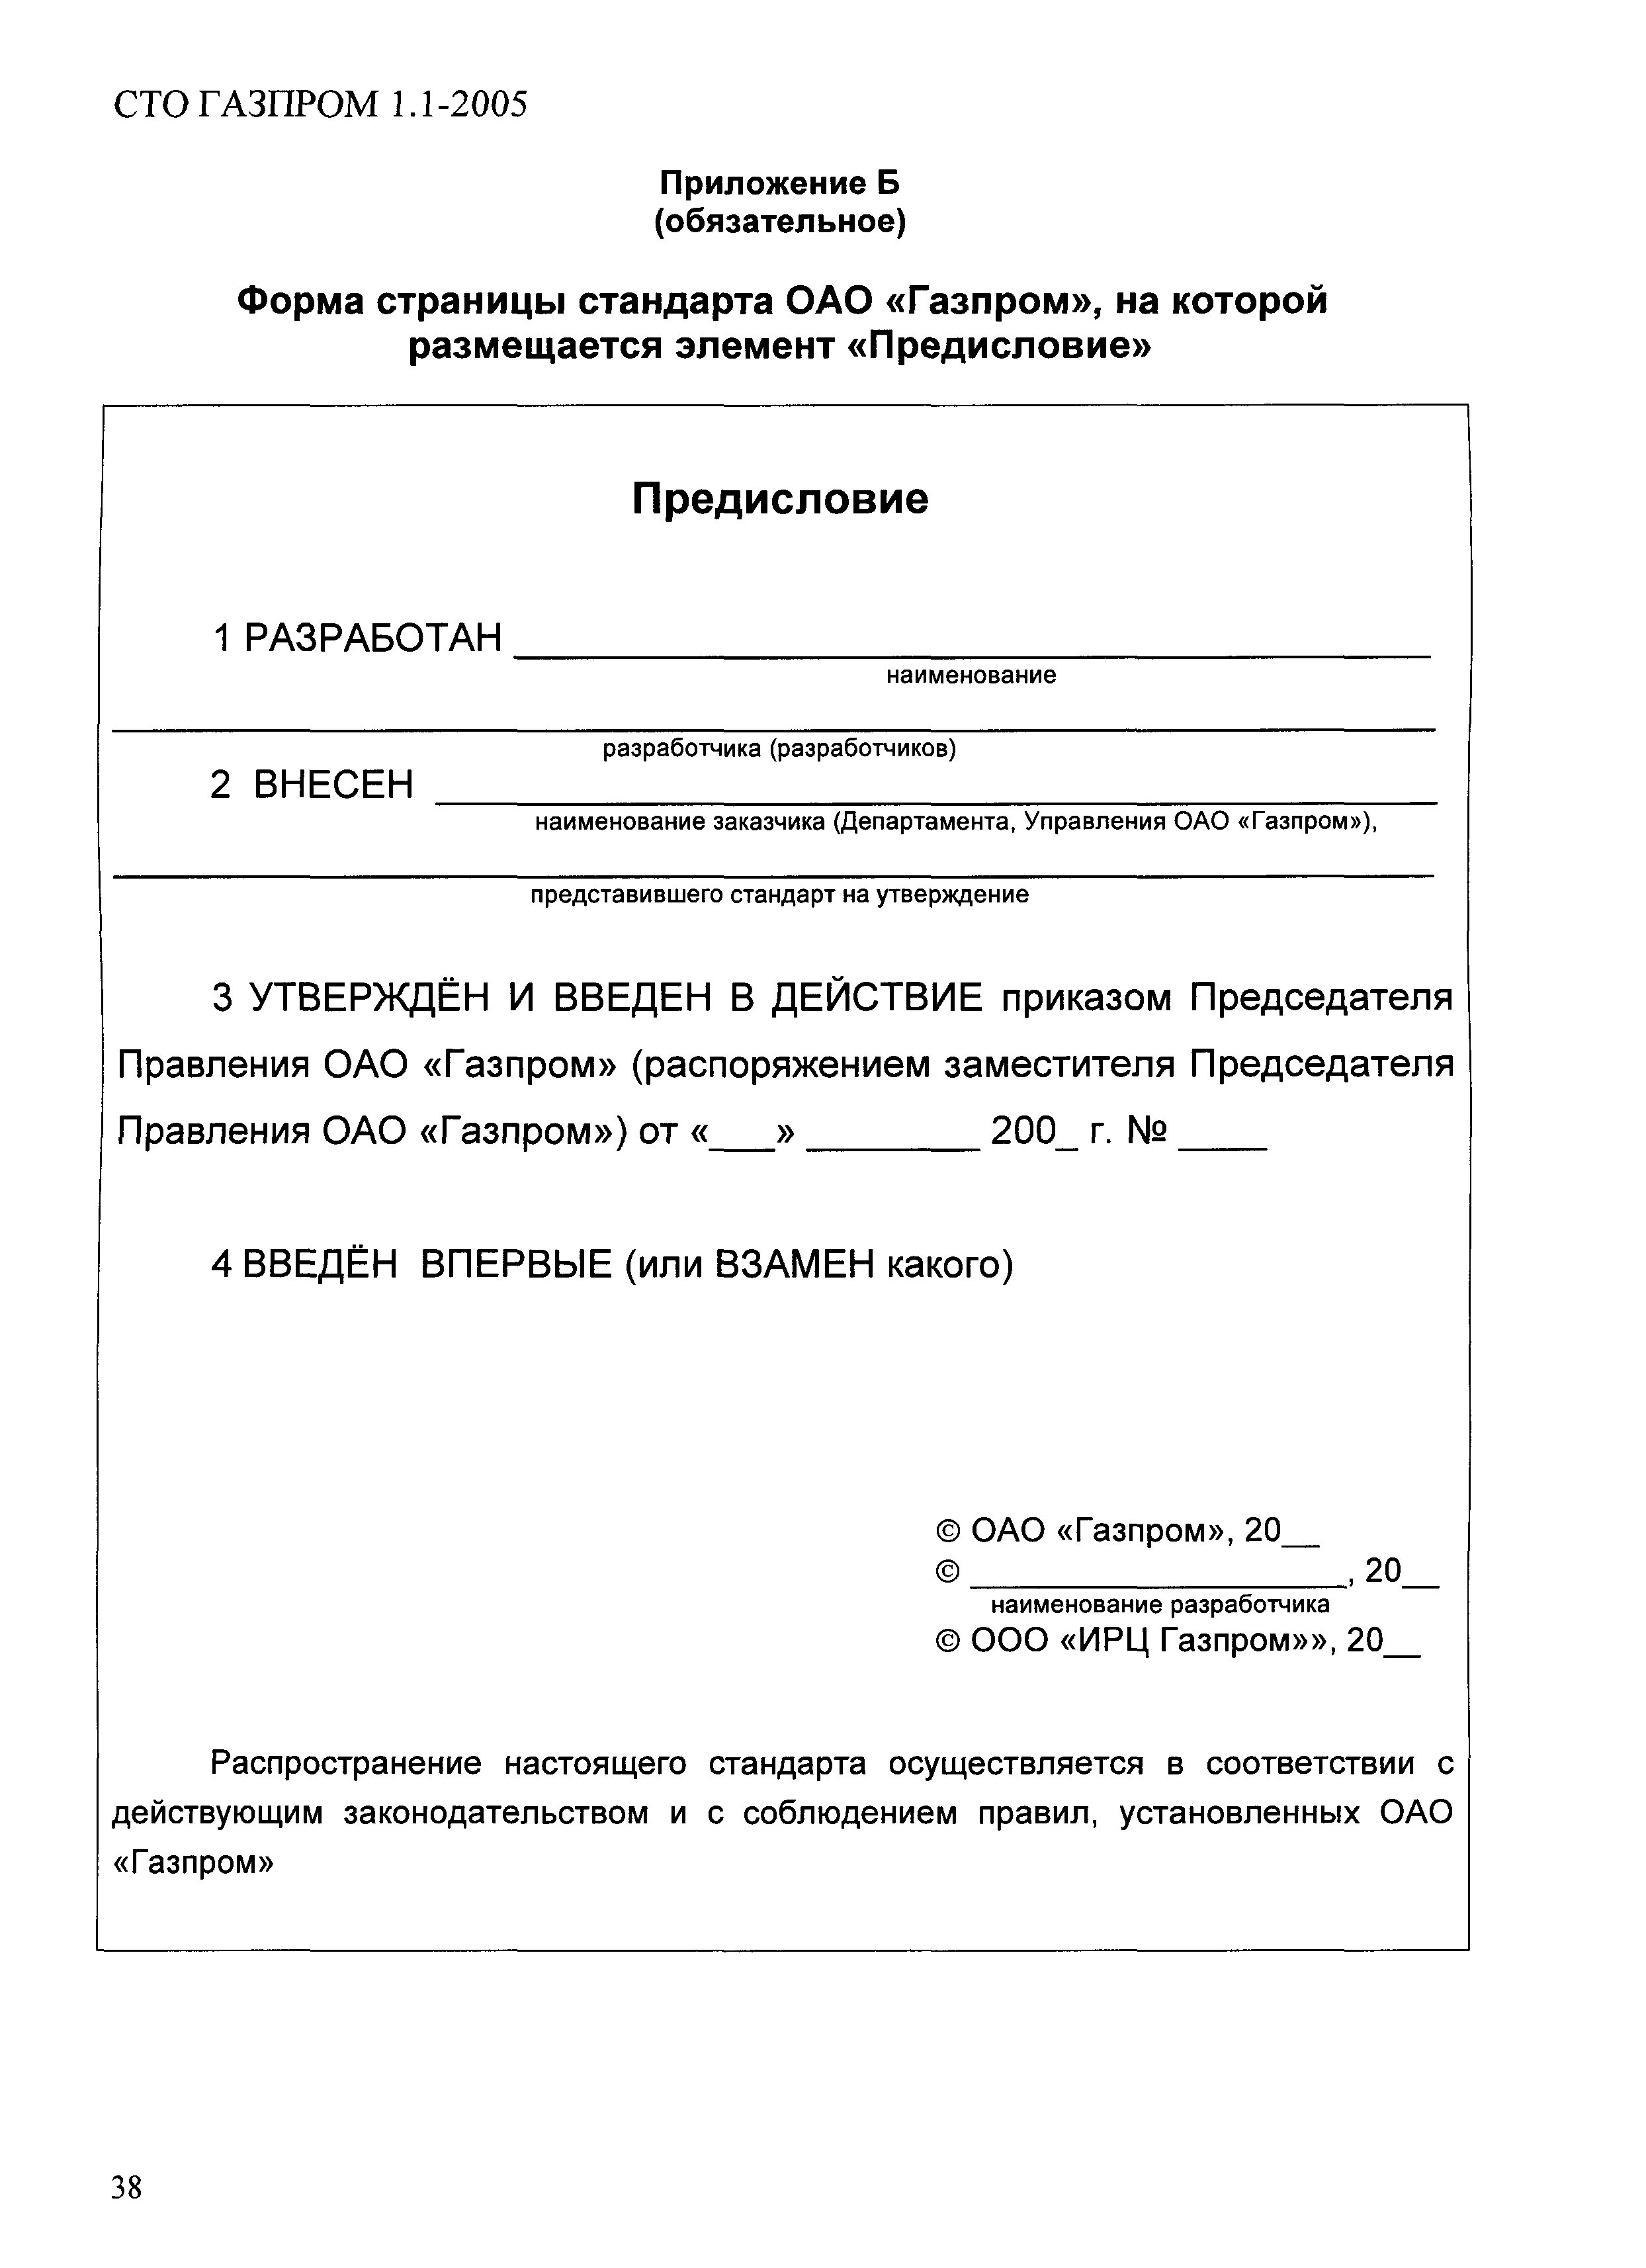 СТО Газпром 1.1-2005